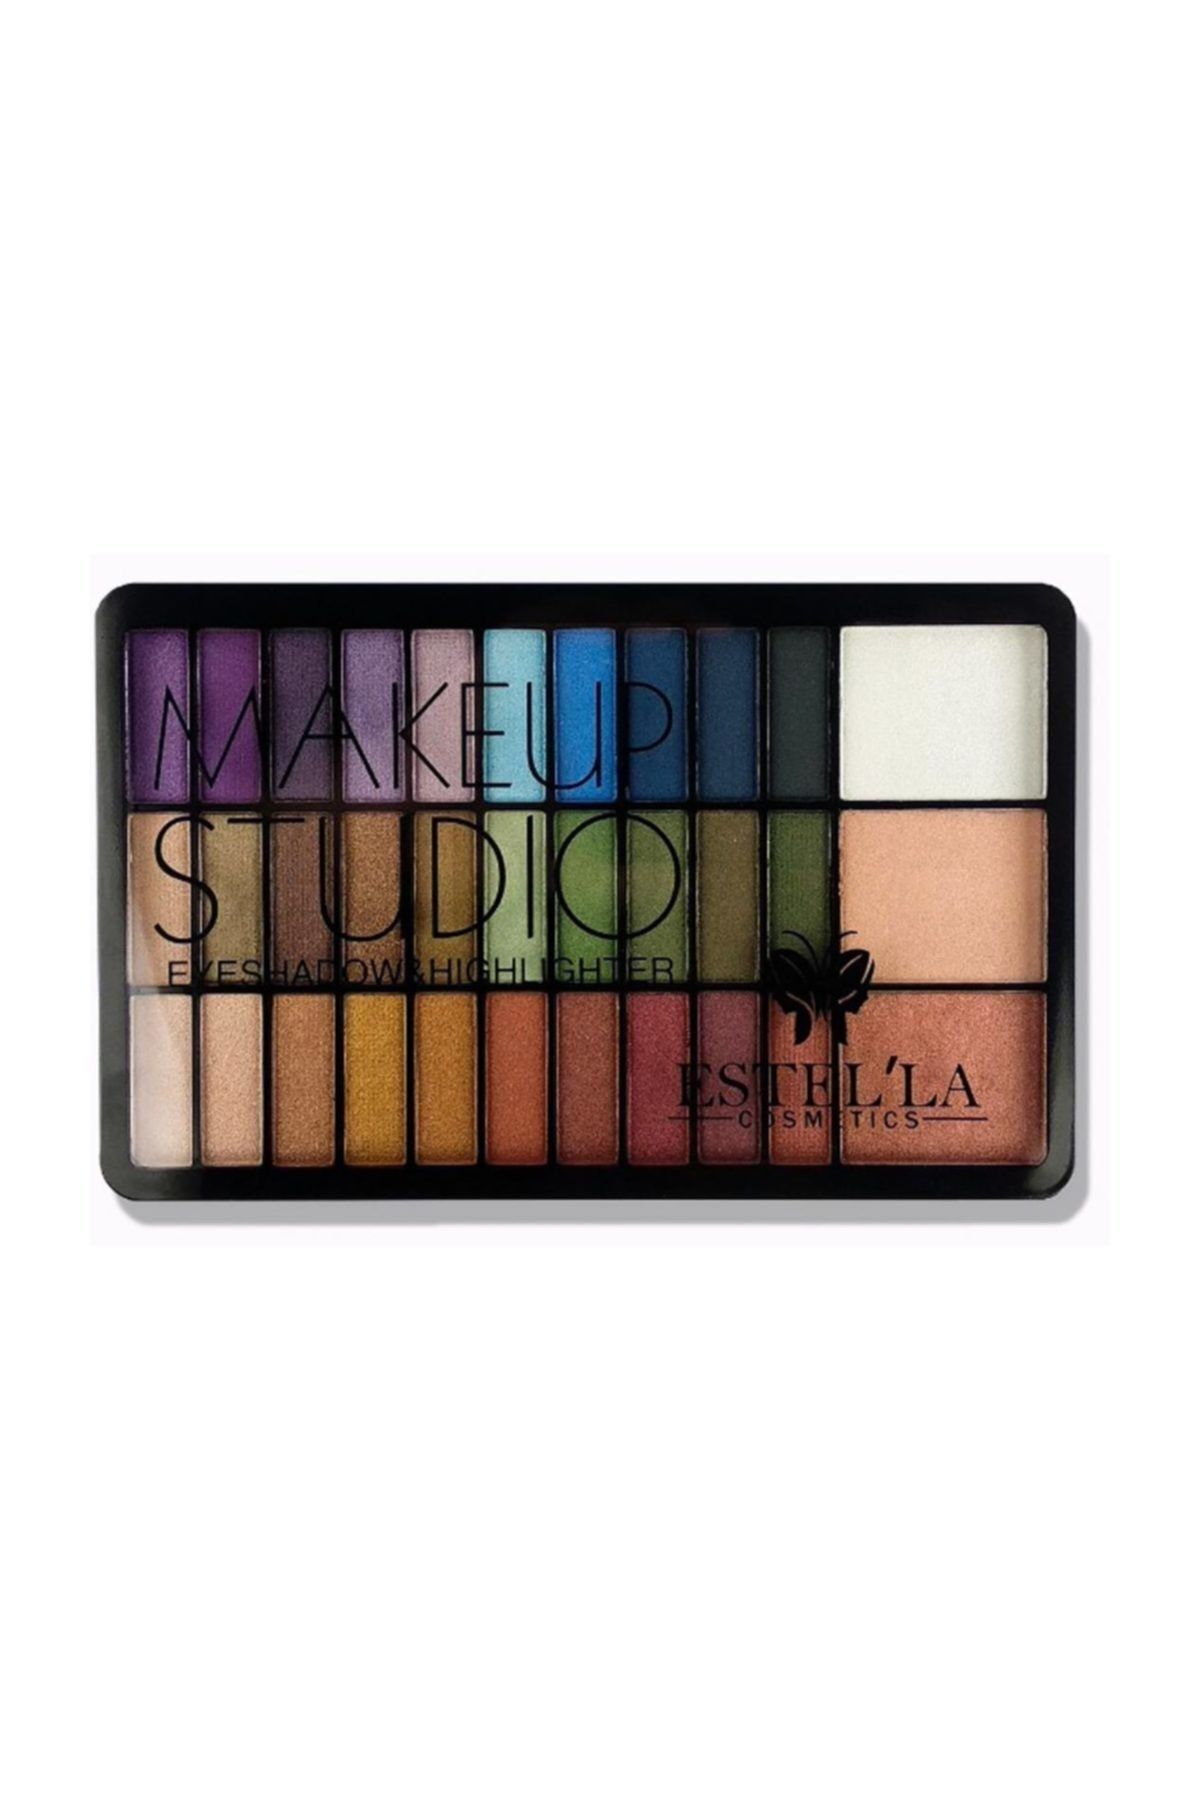 Estella Makeup Studio 33'li Set Renkli Far Paleti